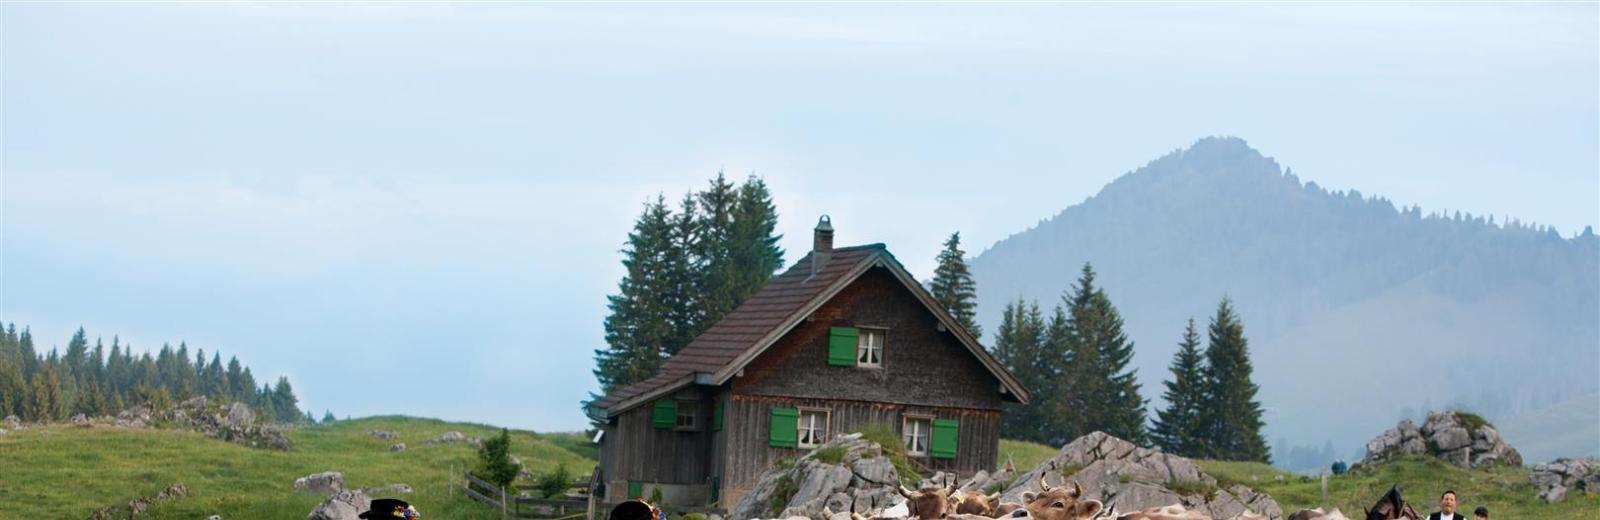 Moving cattle up to alpine pastures © Switzerland Tourism